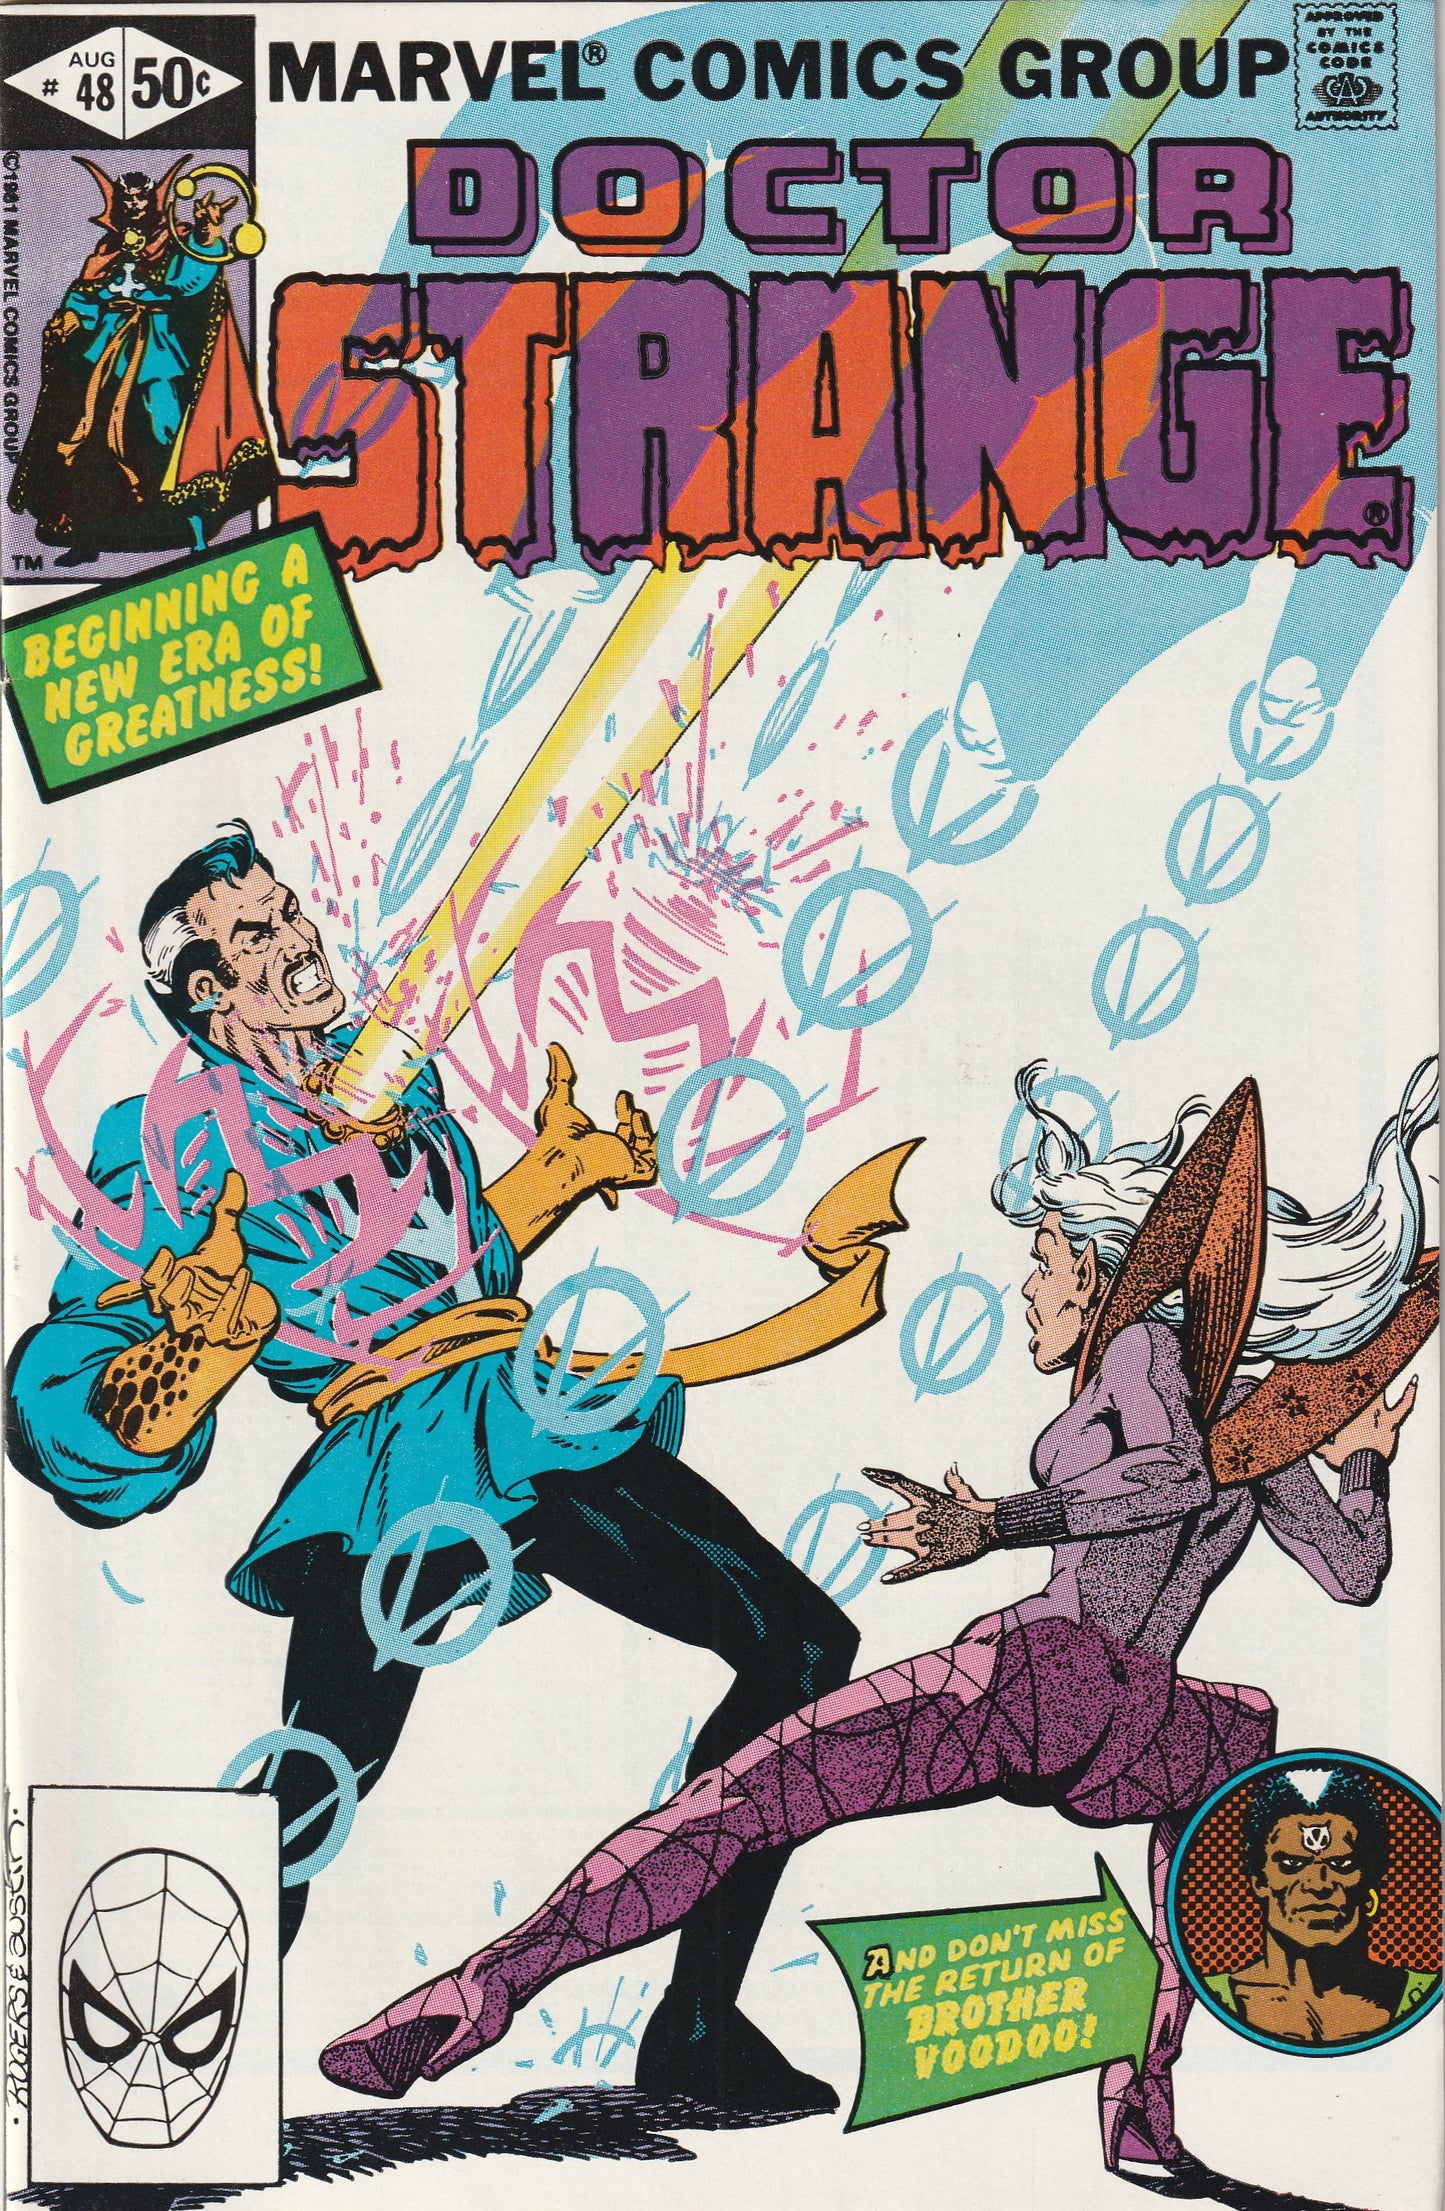 Doctor Strange #48 (1981) - 1st meeting of Doctor Strange and Brother Voodoo